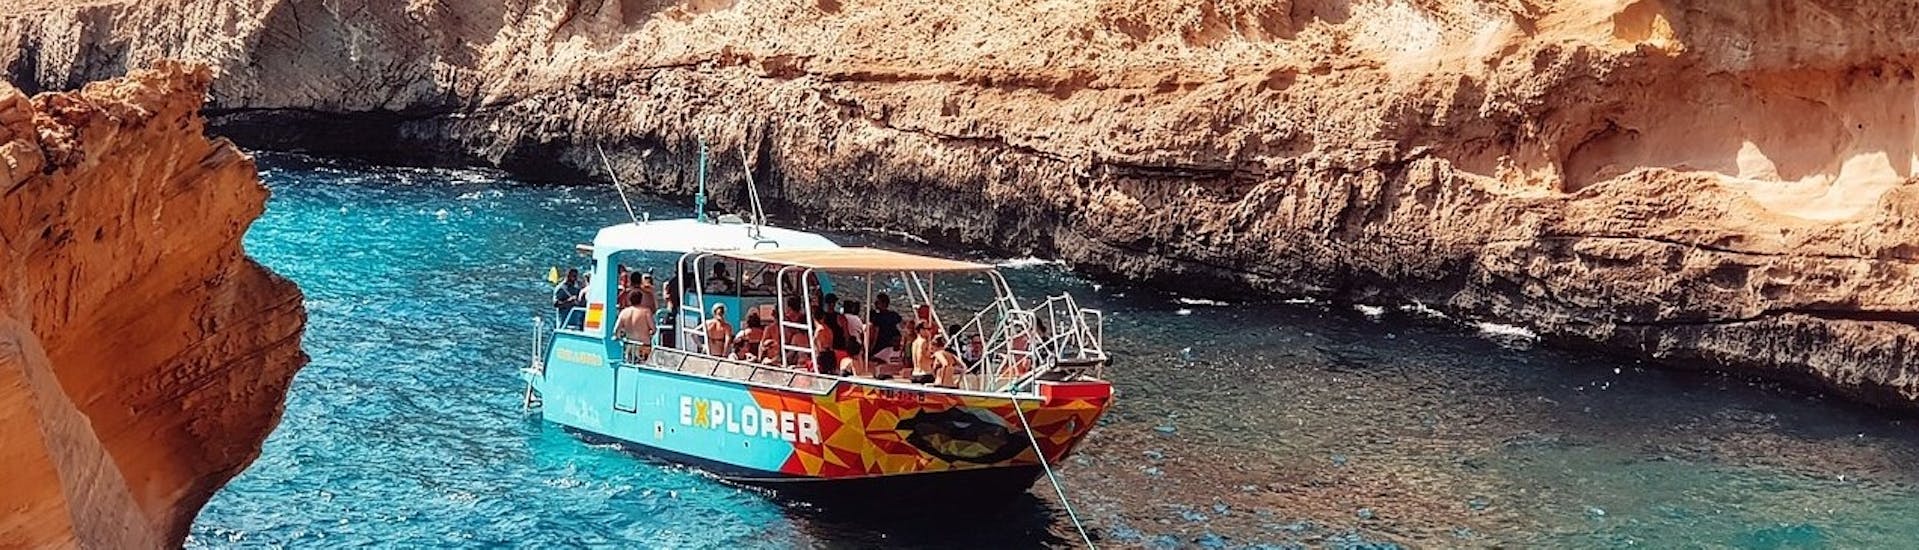 Balade en bateau Palma de Mallorca avec Baignade & Visites touristiques.